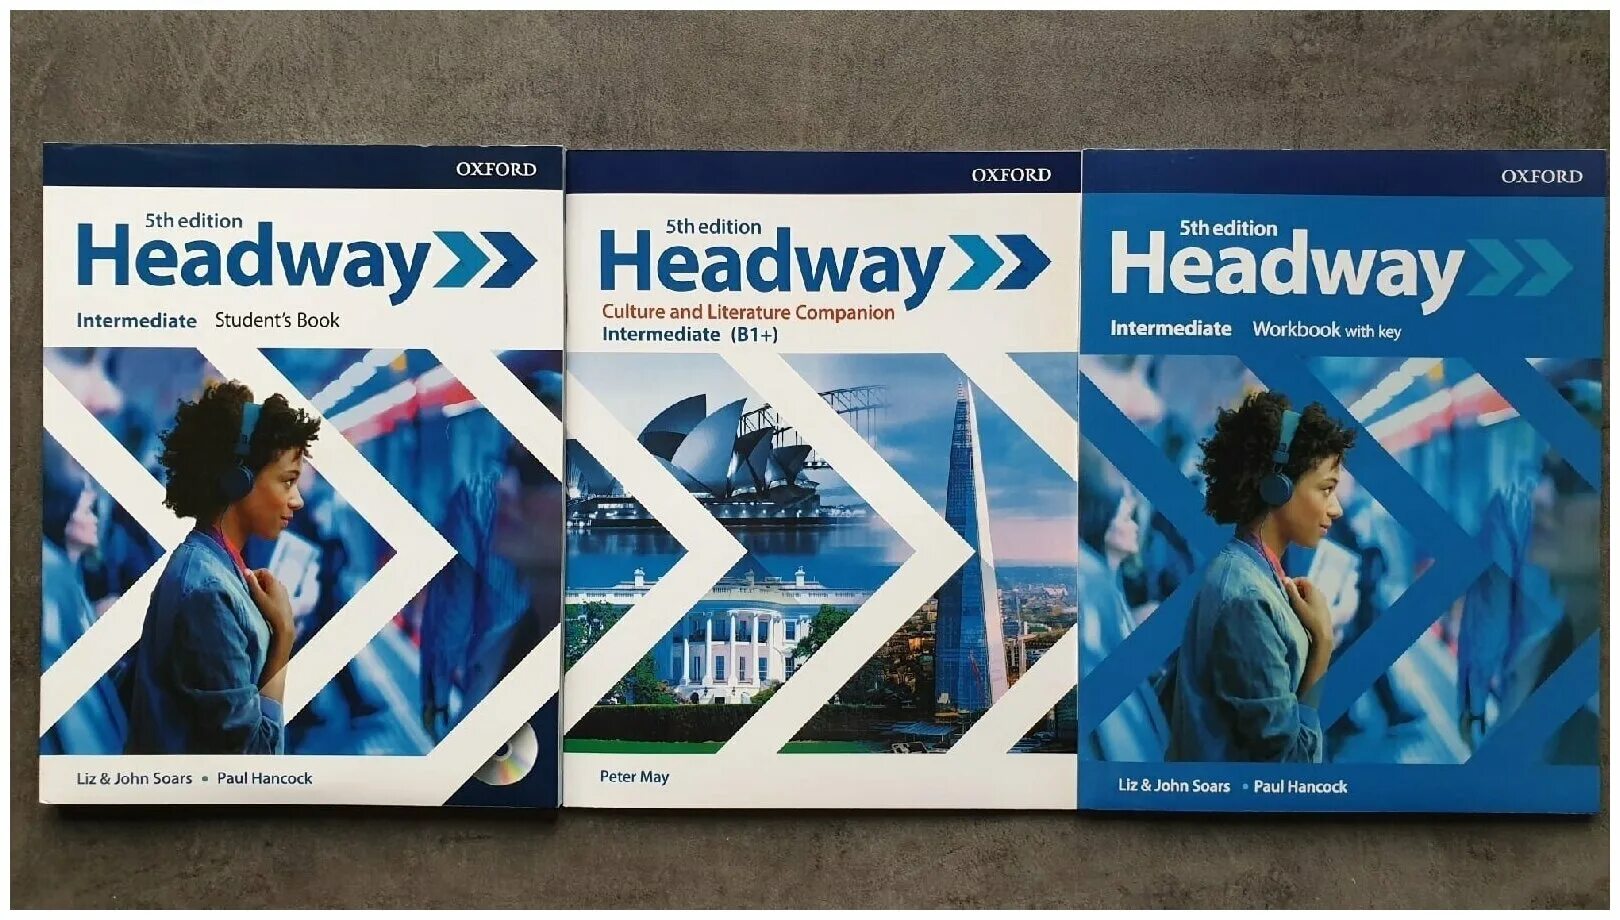 Oxford 5th Edition Headway. Headway 5 Workbook. Headway Intermediate 5th Edition. Headway книга. New headway intermediate 5th edition